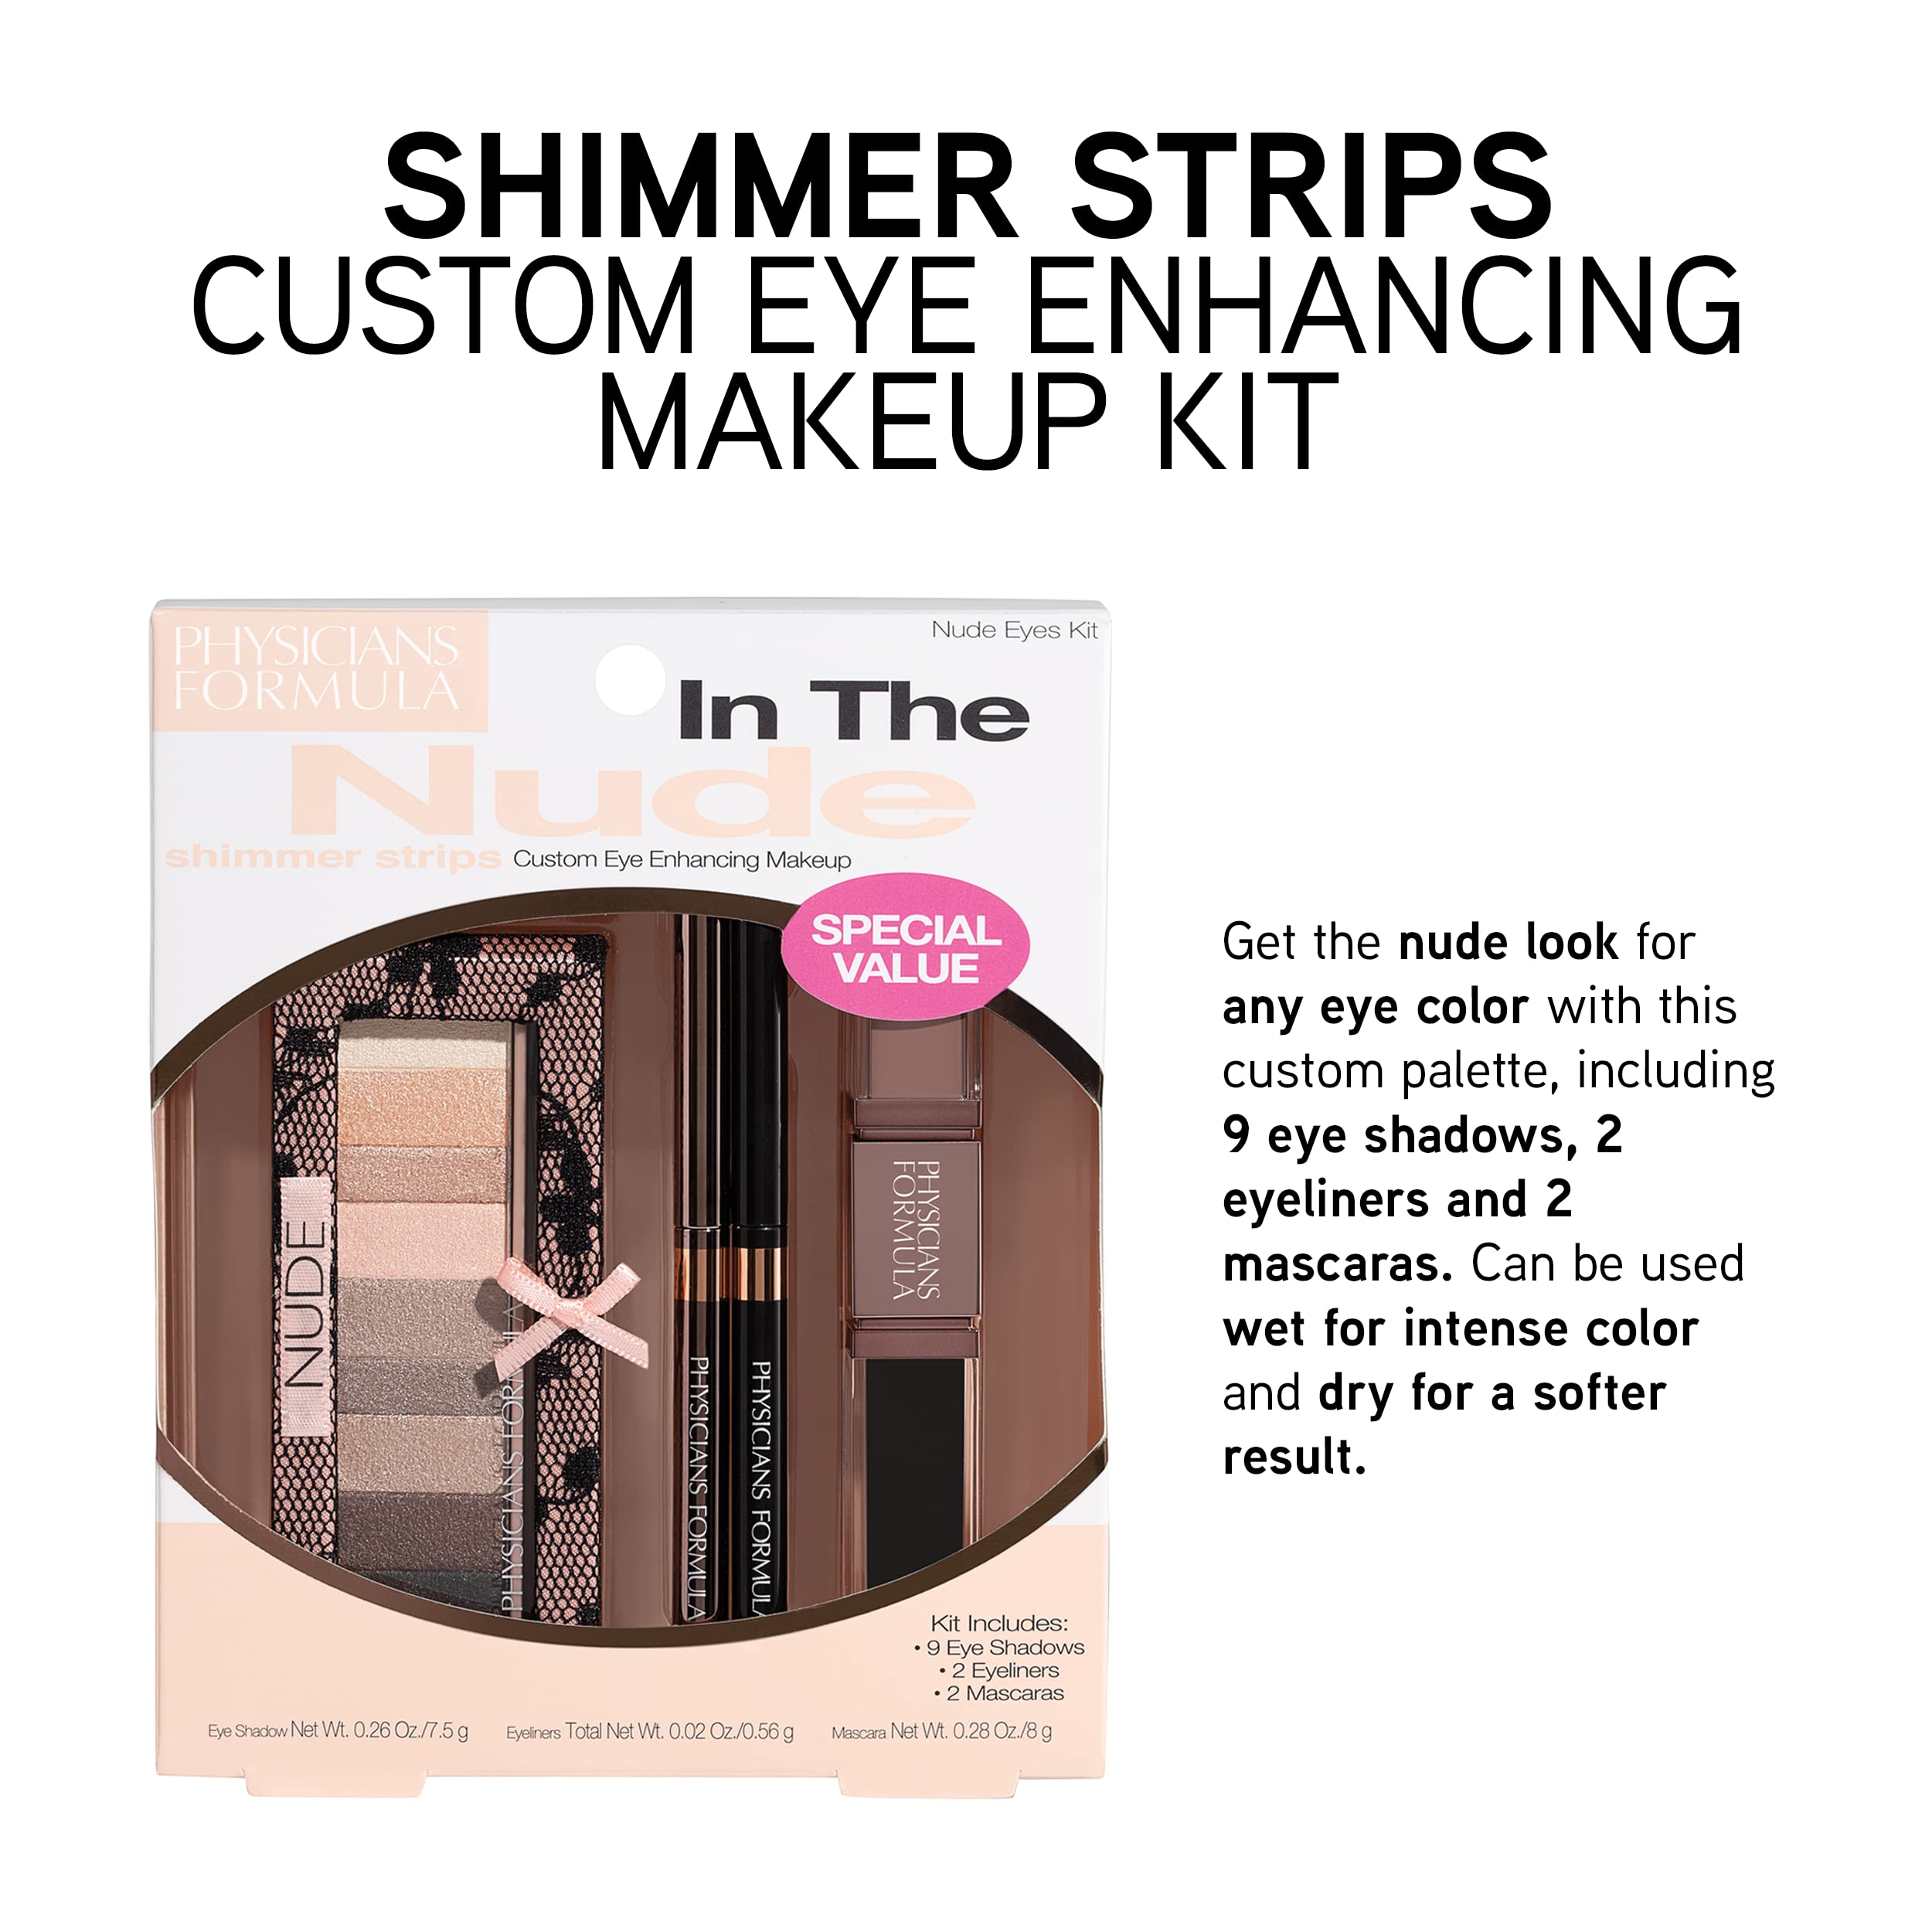 Physicians Formula Shimmer Strips Custom Eye Enhancing Kit with Eyeshadow, Eyeliner & Mascara, Nude